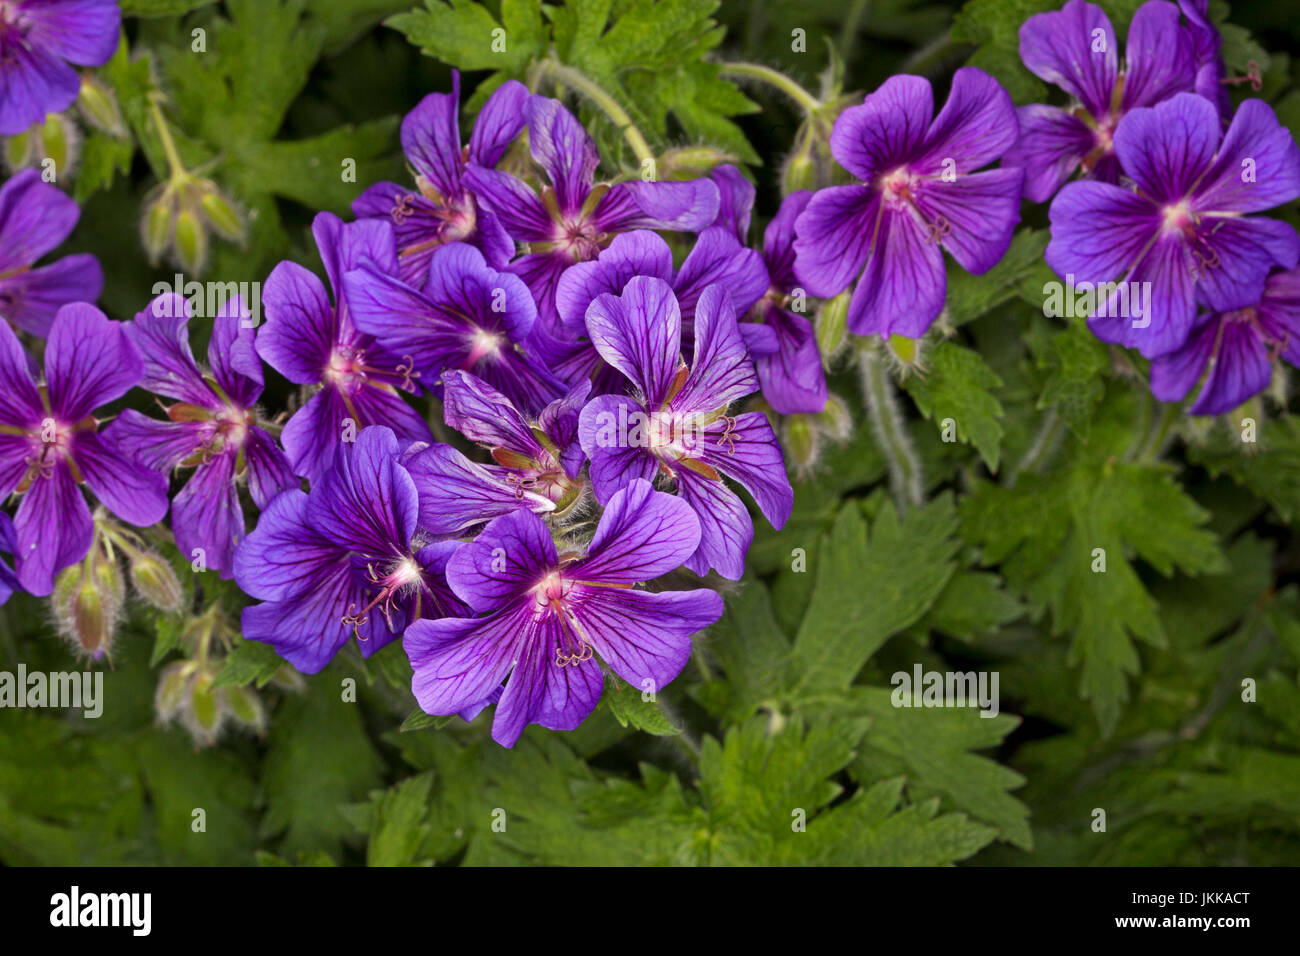 Mass of vivid purple flowers and green leaves of Geranium, Cranes bill, low growing rockery plant Stock Photo